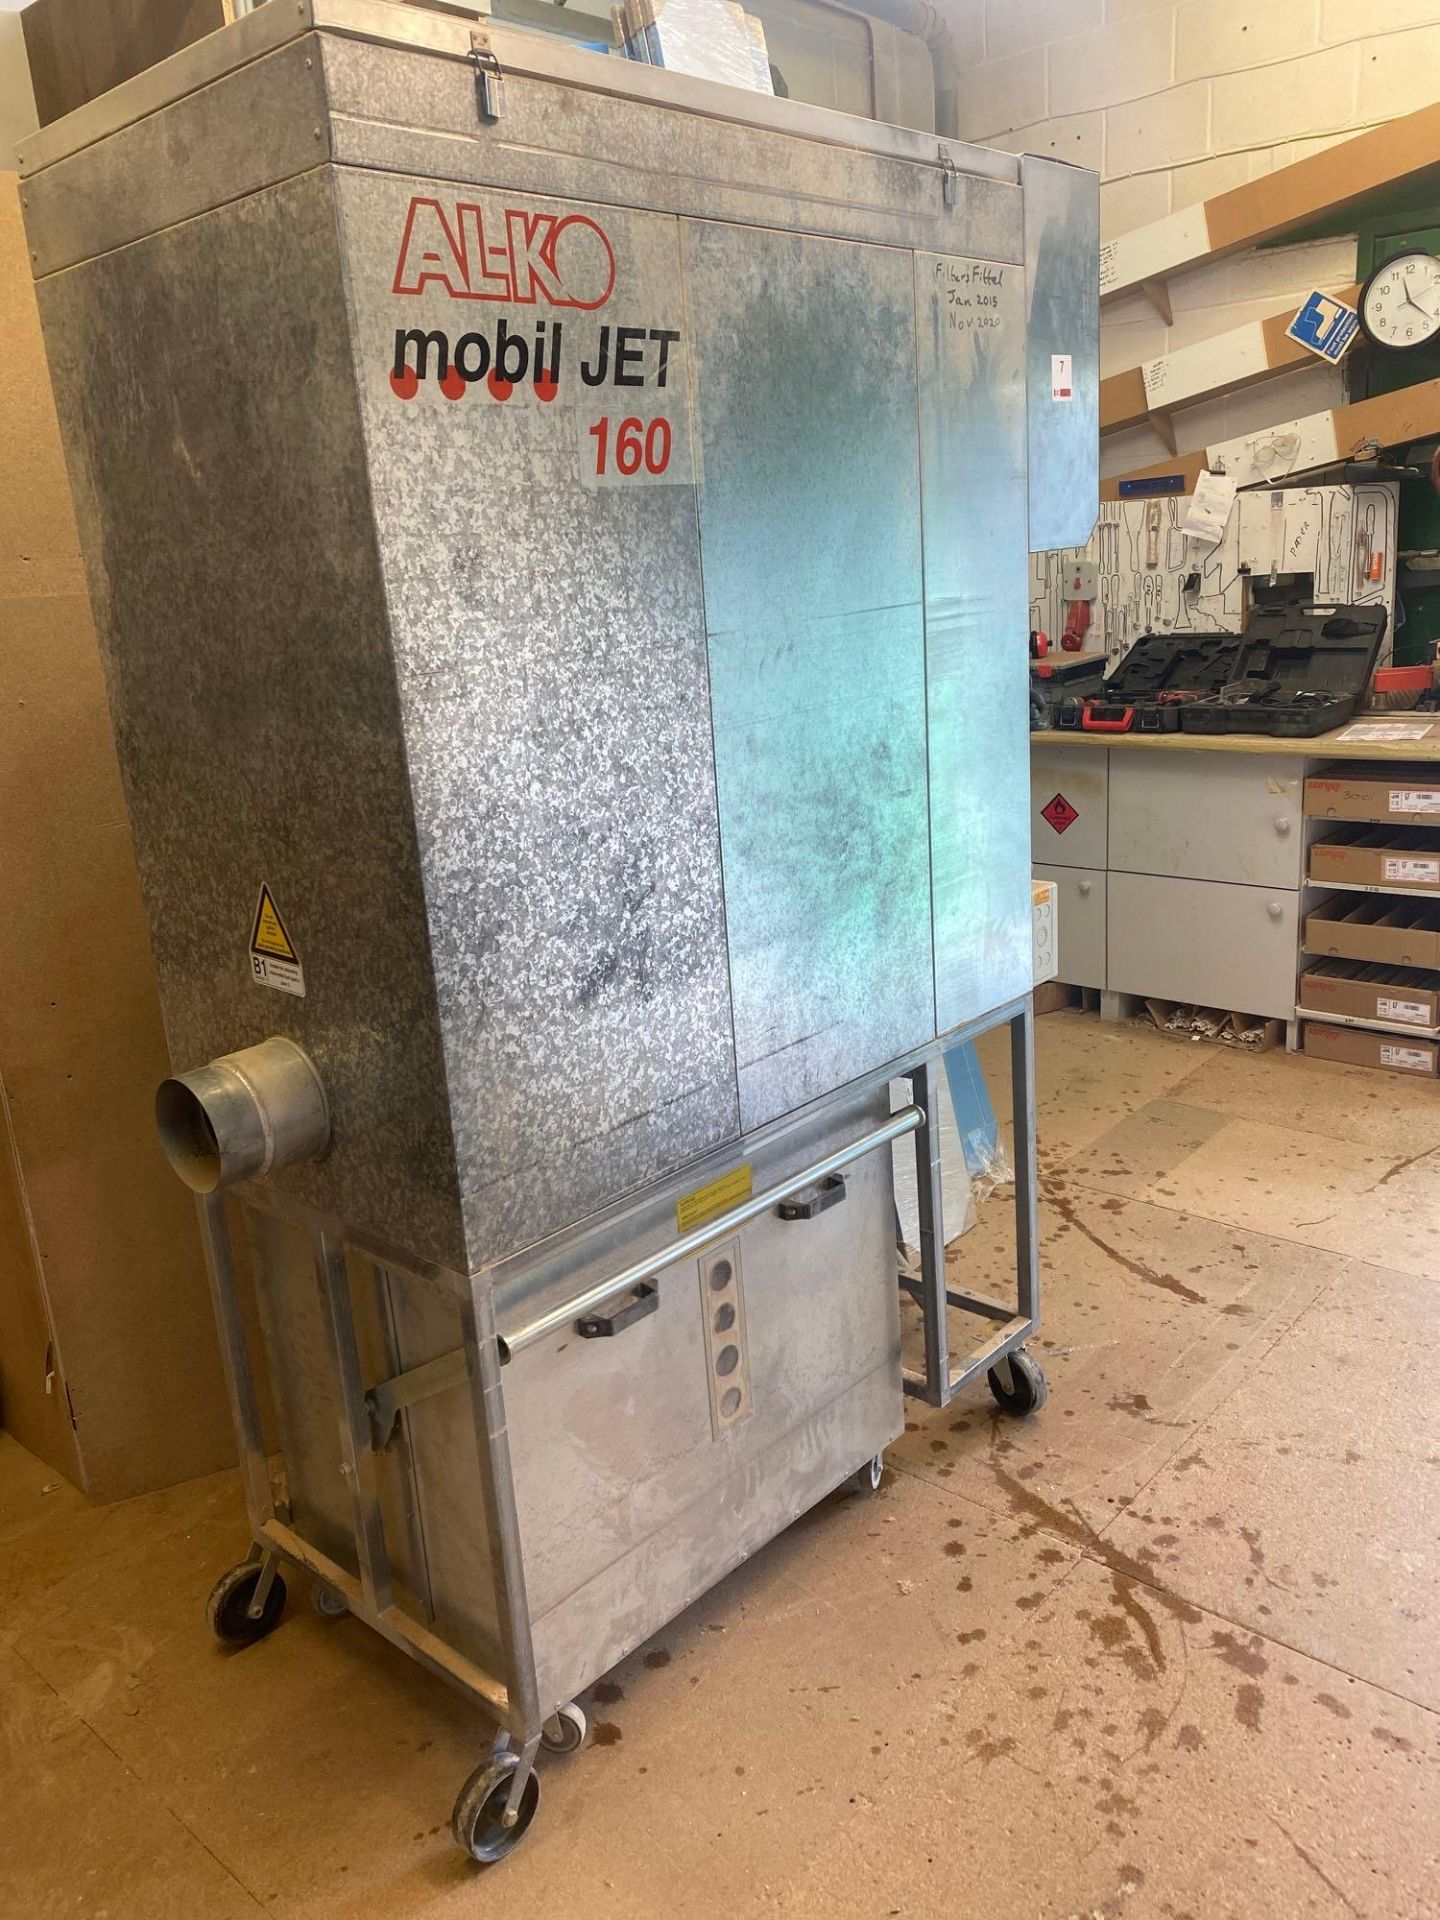 AL-KO Kobel mobil JGT160 dust extraction system